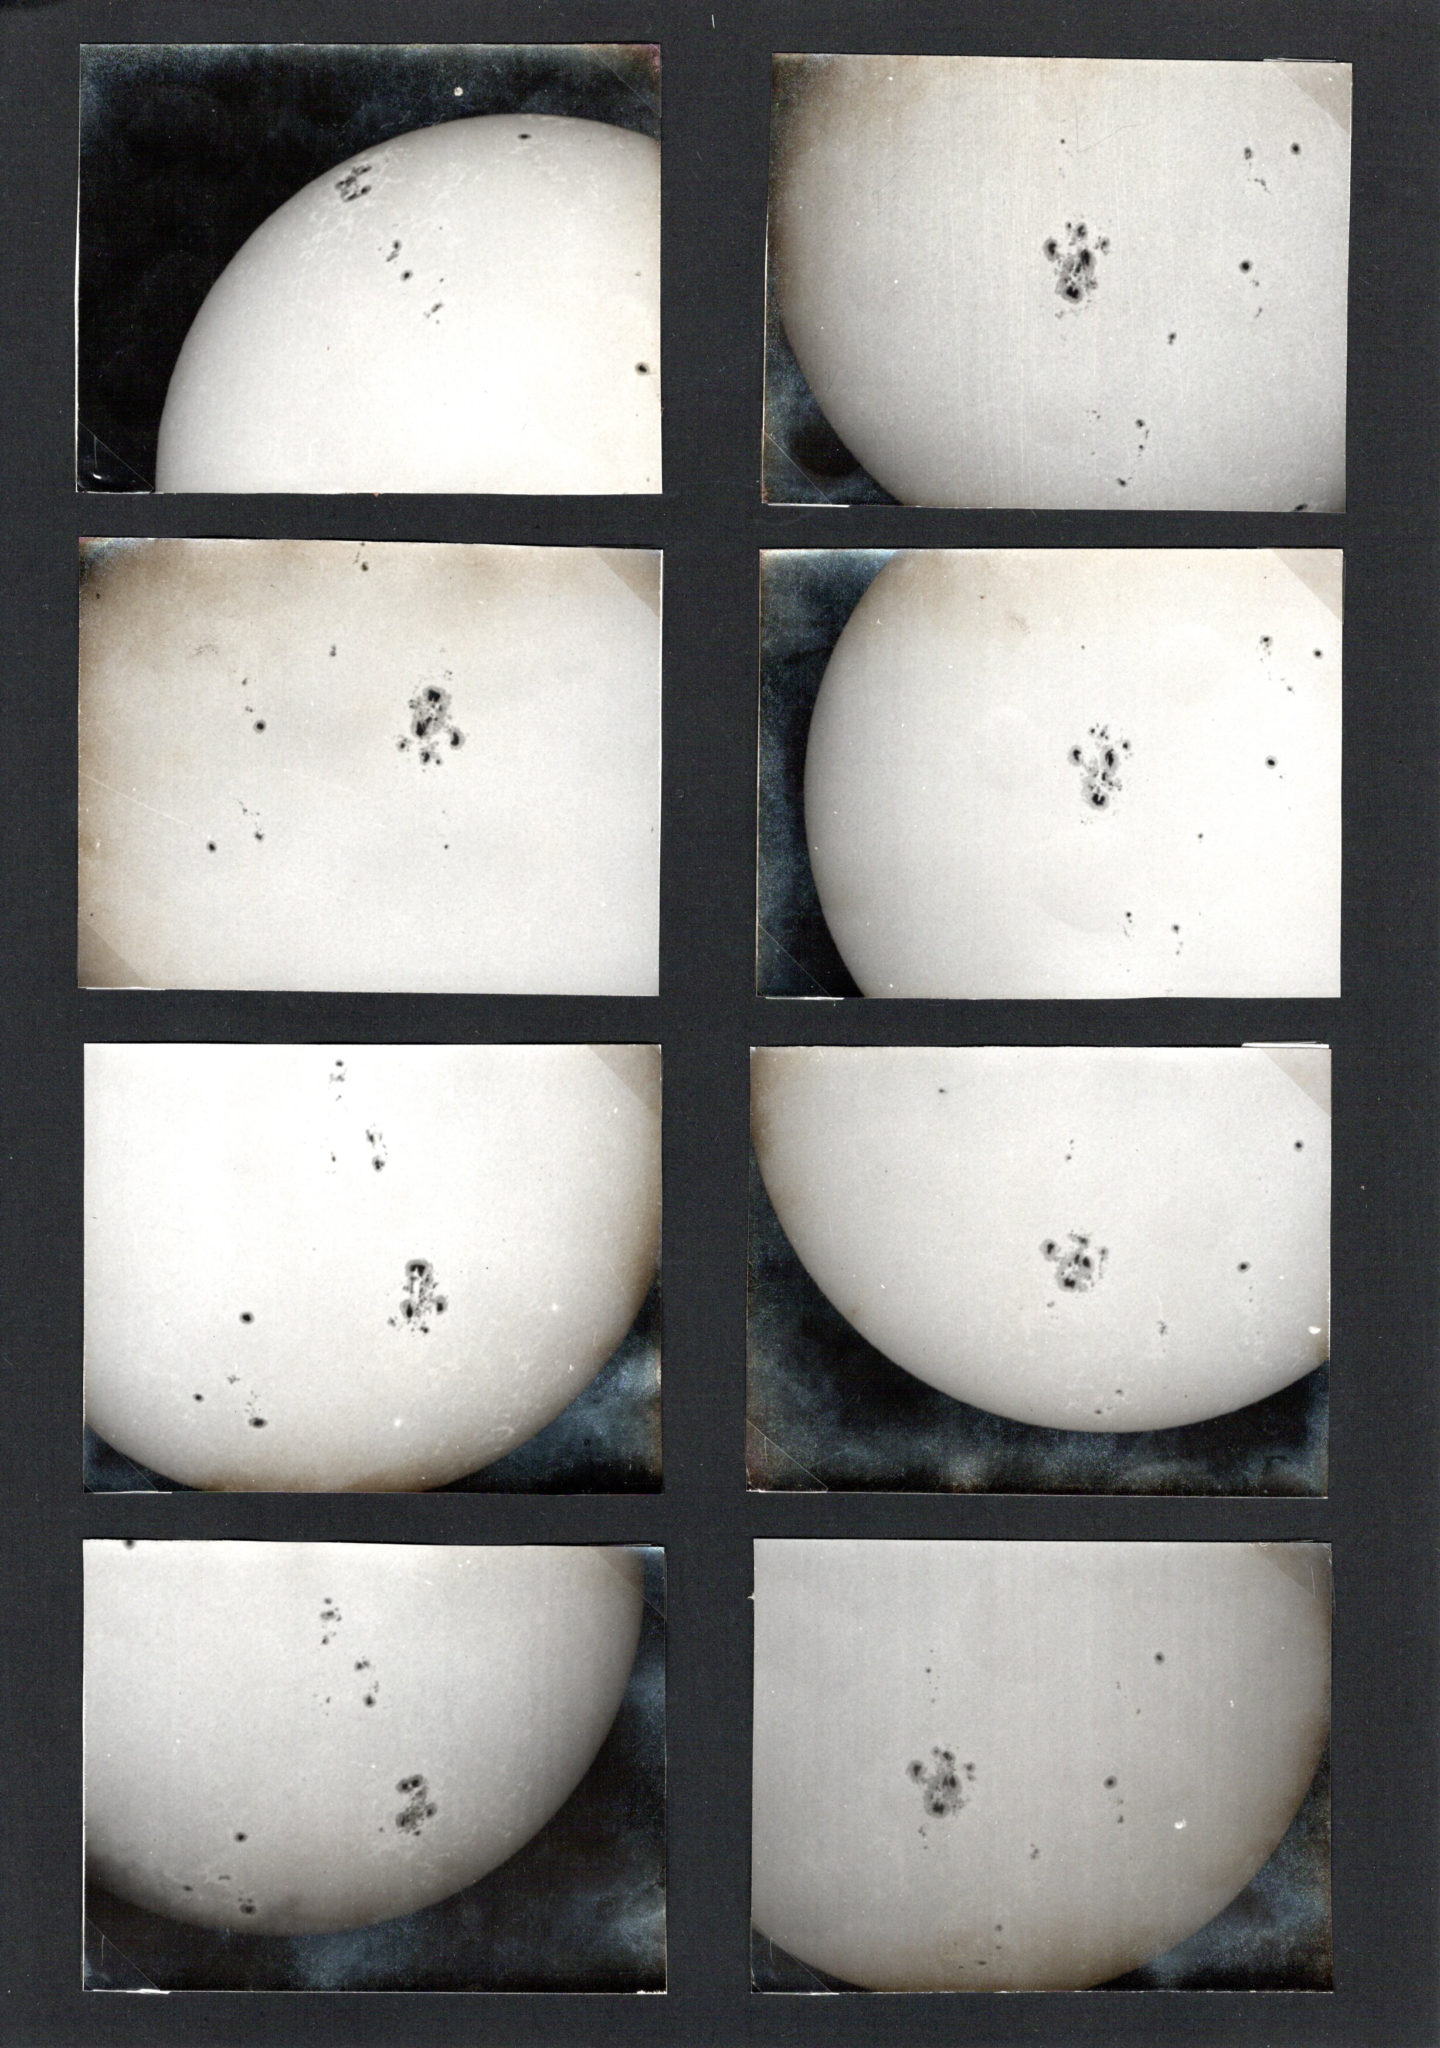 Quénisset ? – 8 original silver prints of sunspots and sun, ca 1925